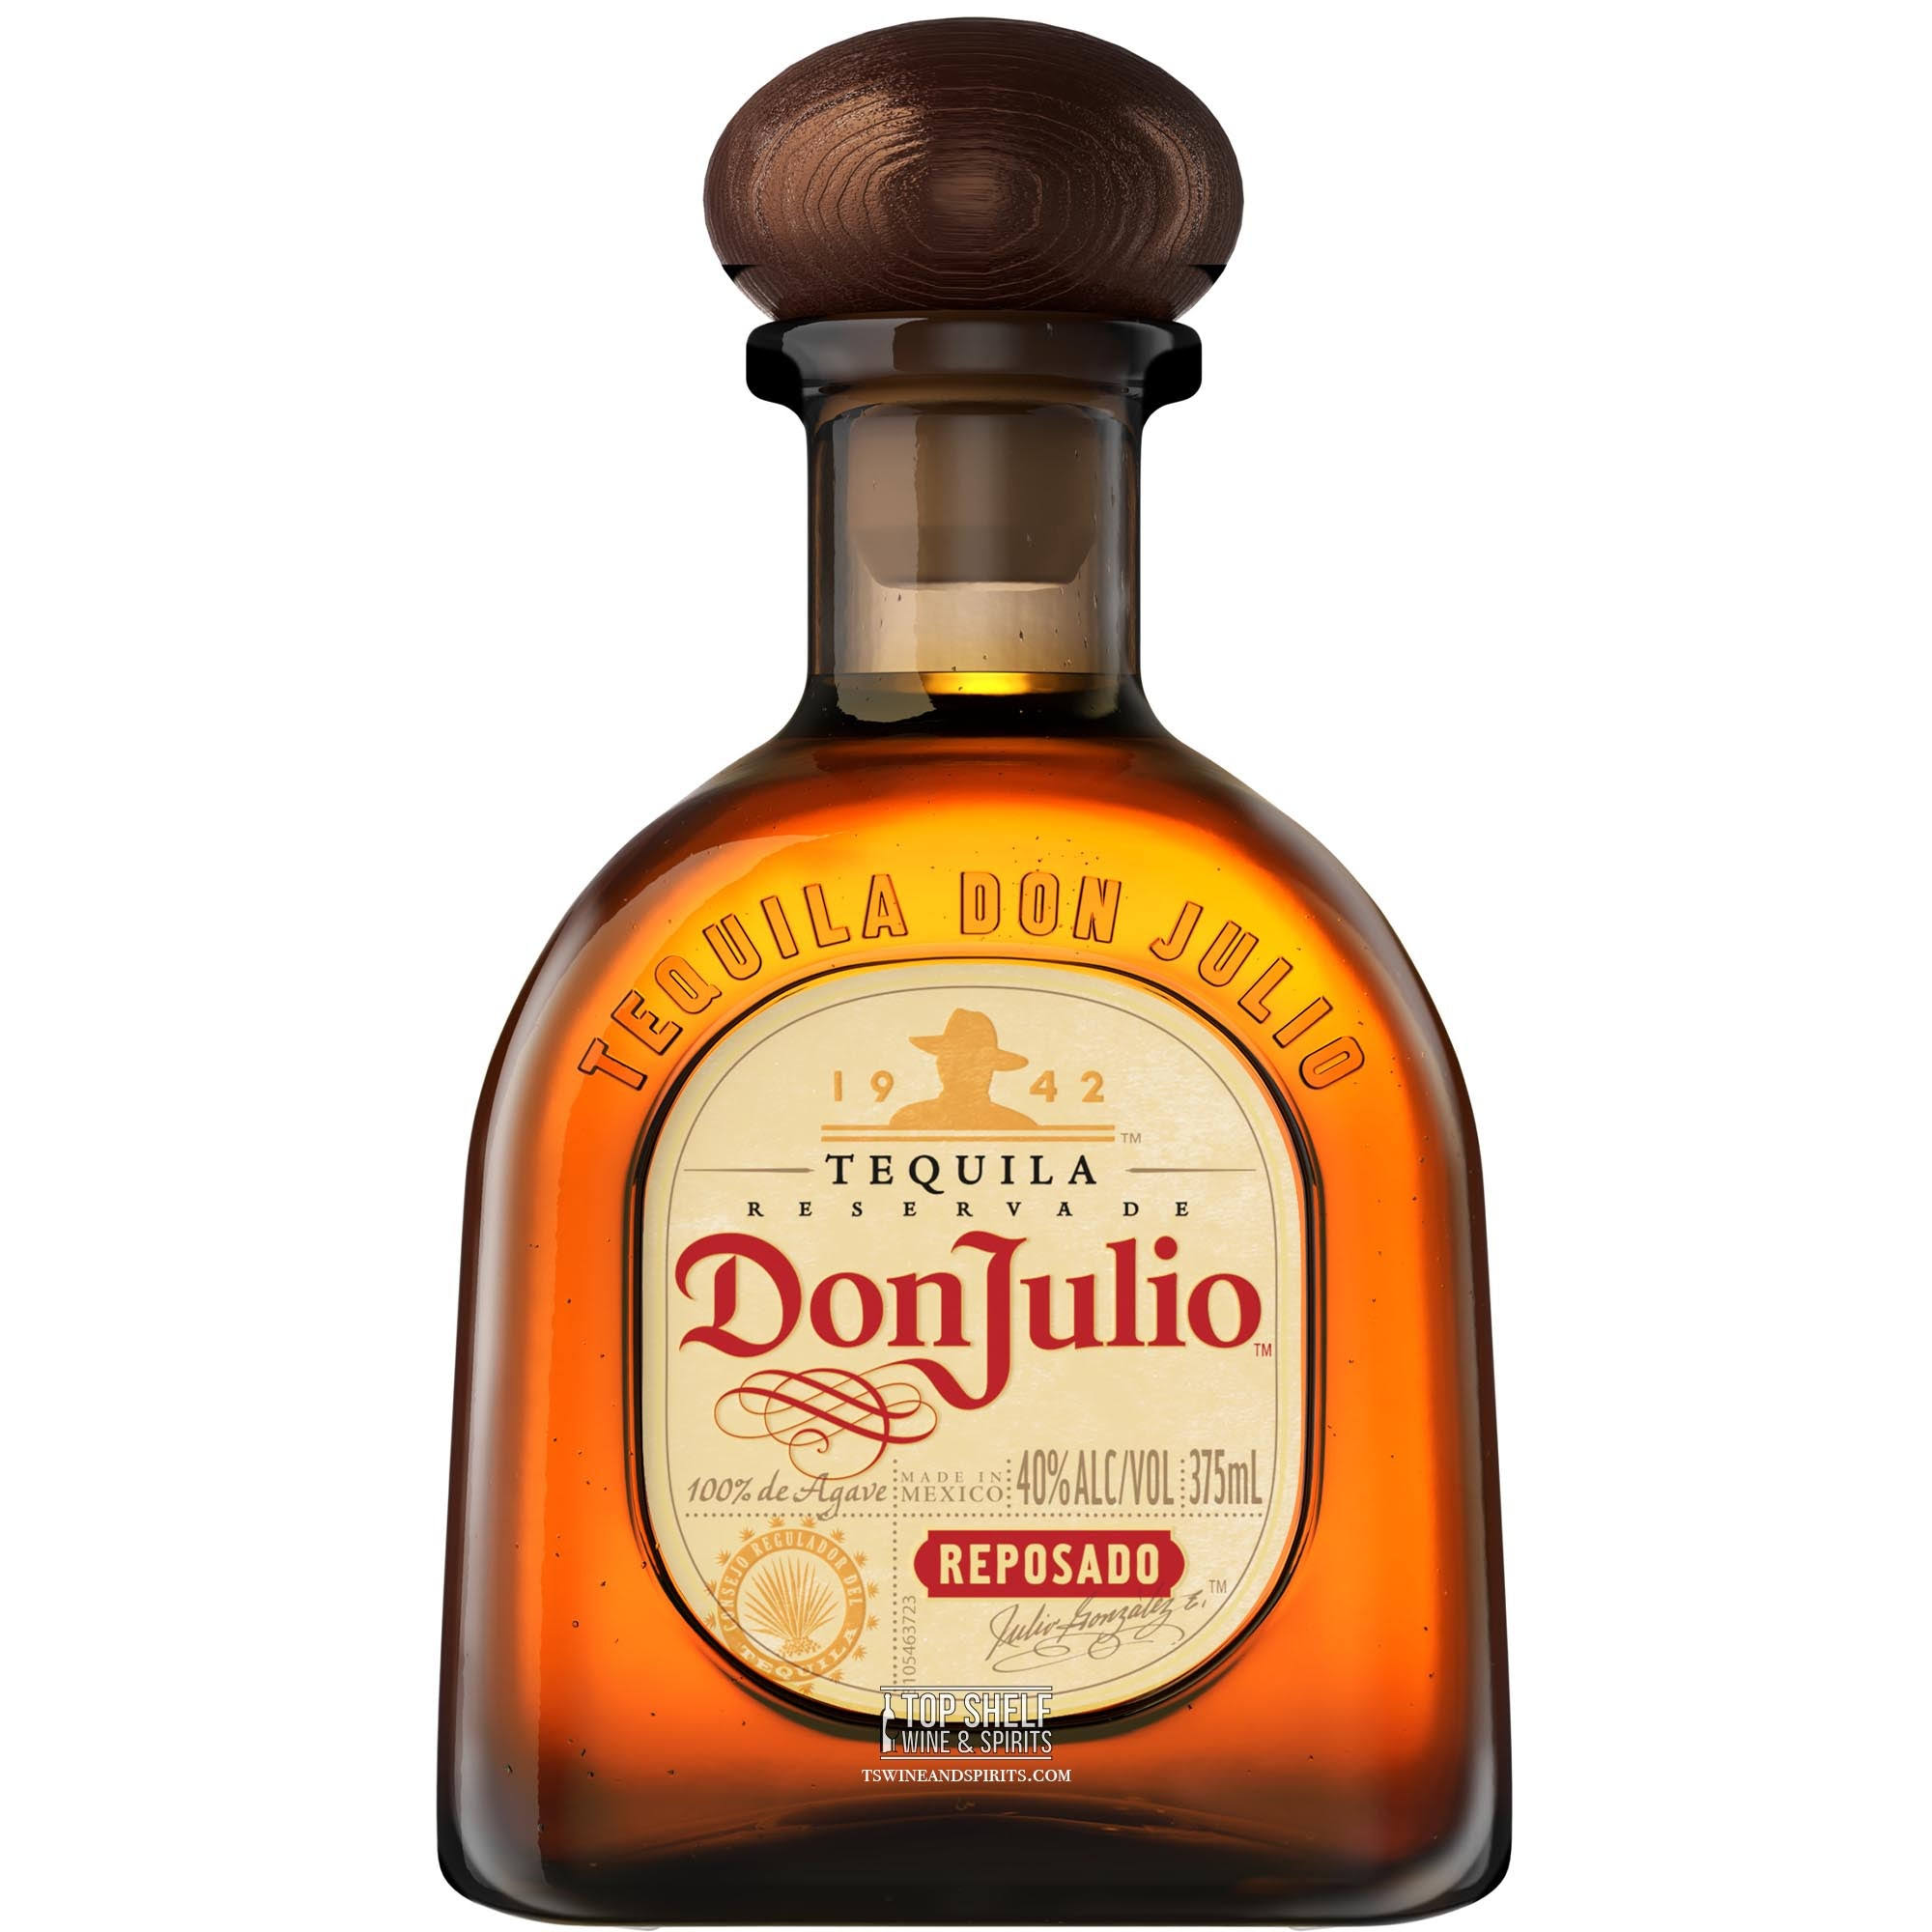 Don Julio Reposado Tequila - 375ml